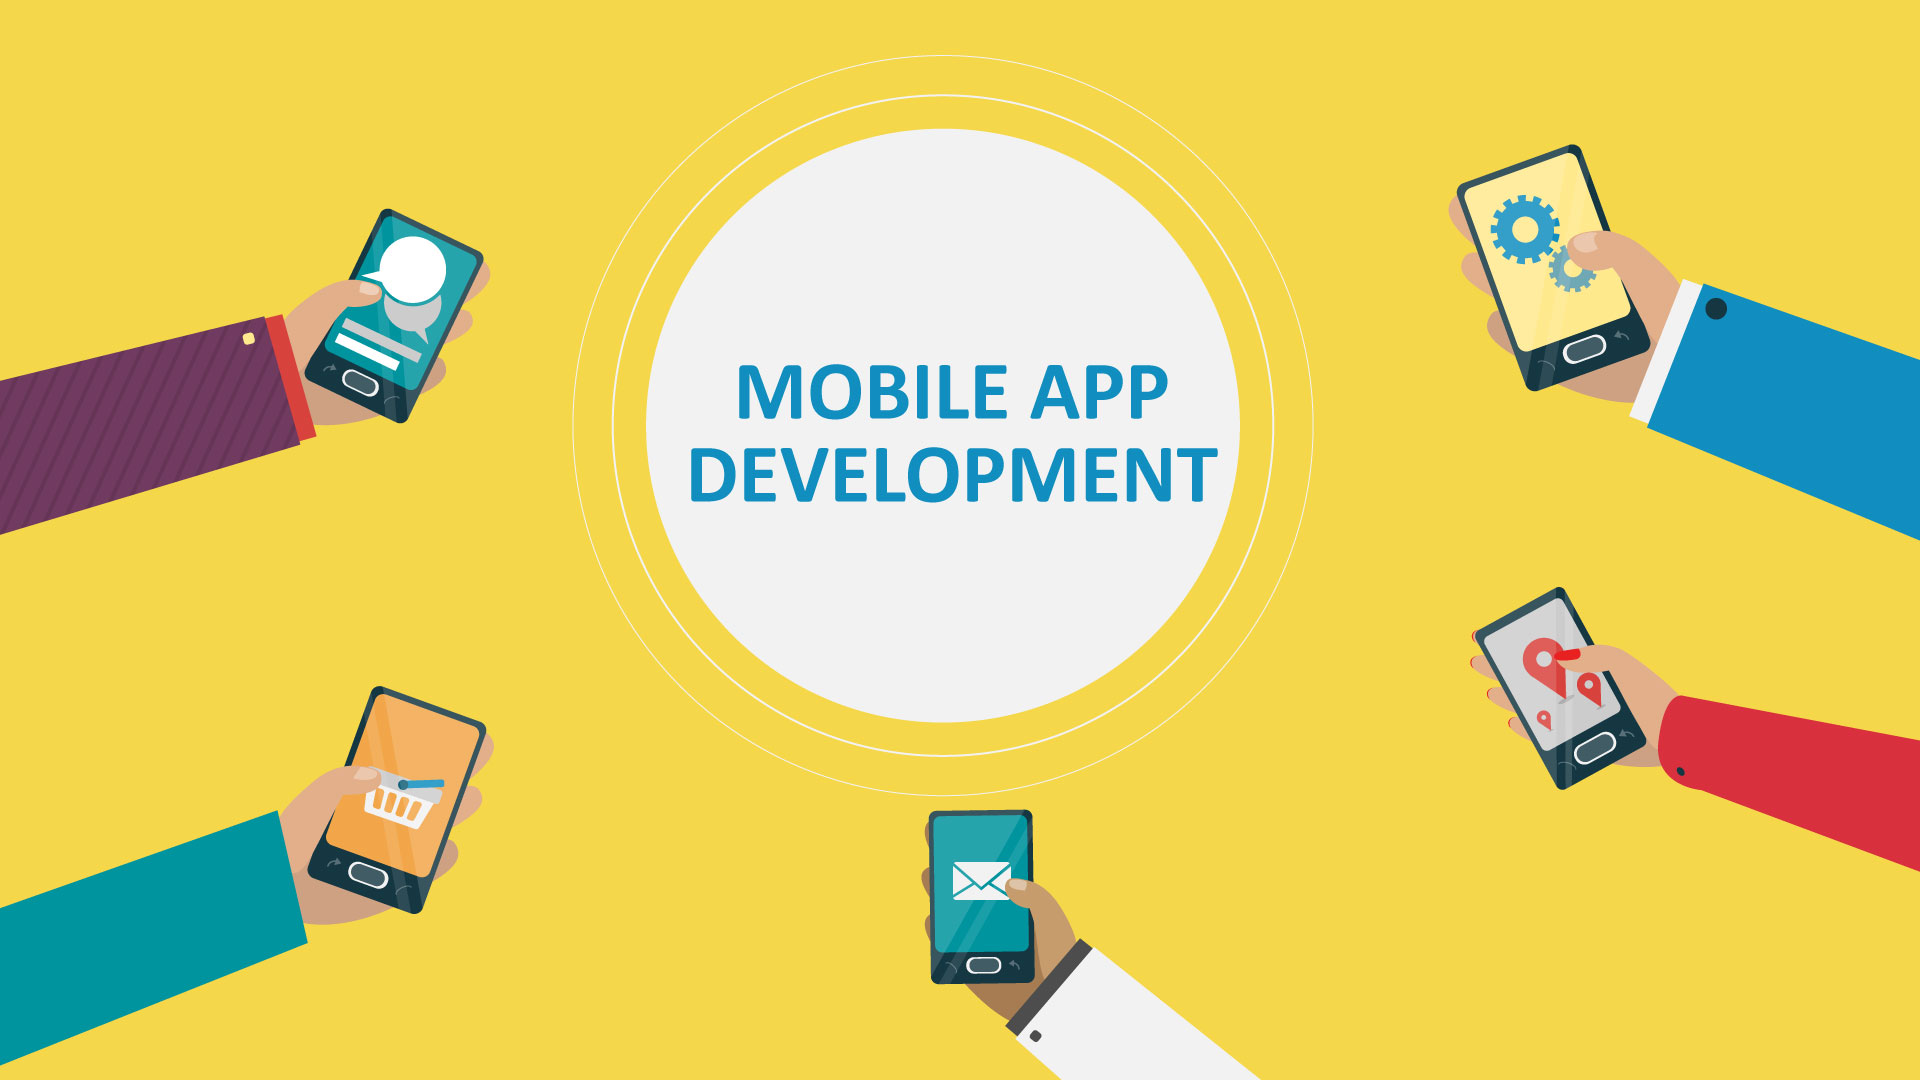 Top Mobile App Development Companies in Jaipur